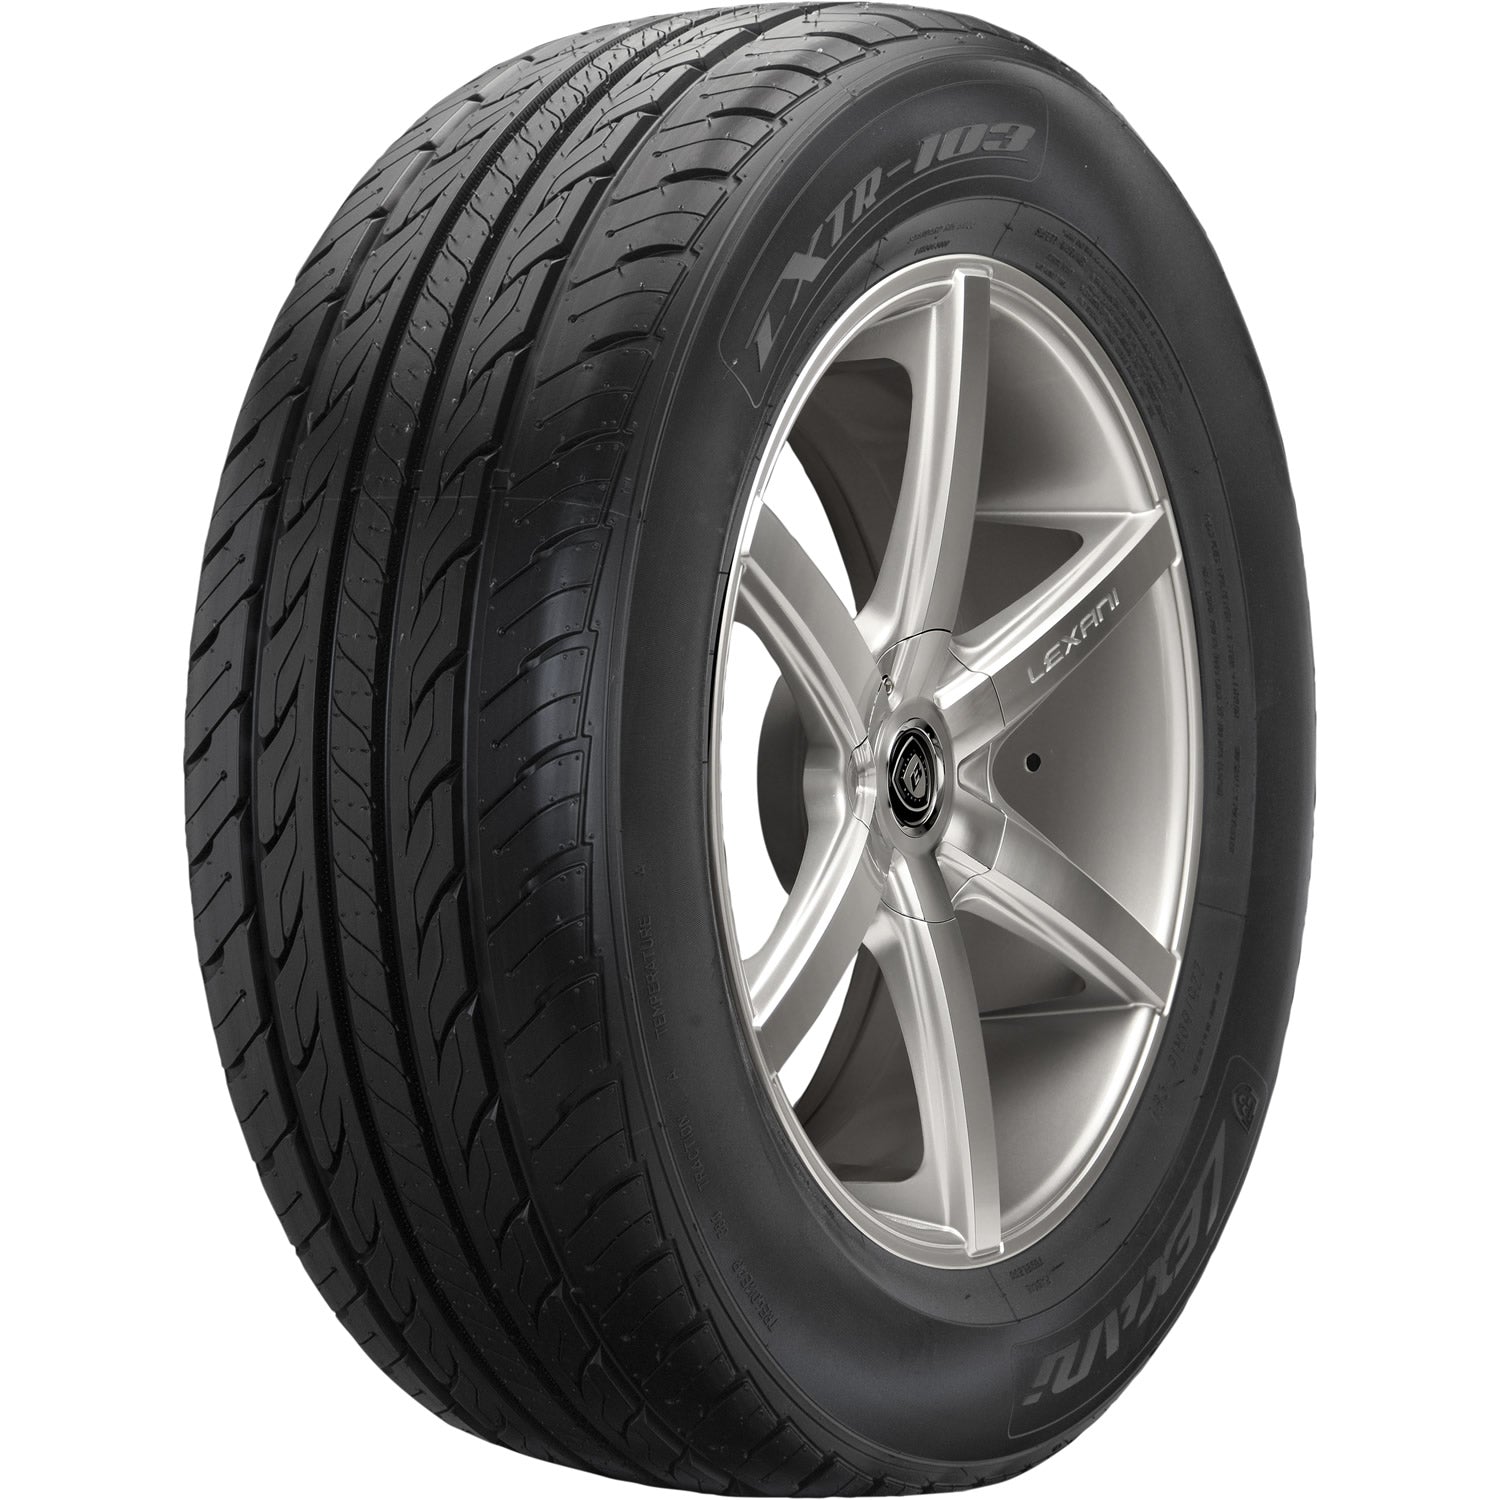 LEXANI LXTR-103 205/60R15 (24.7X8.2R 15) Tires